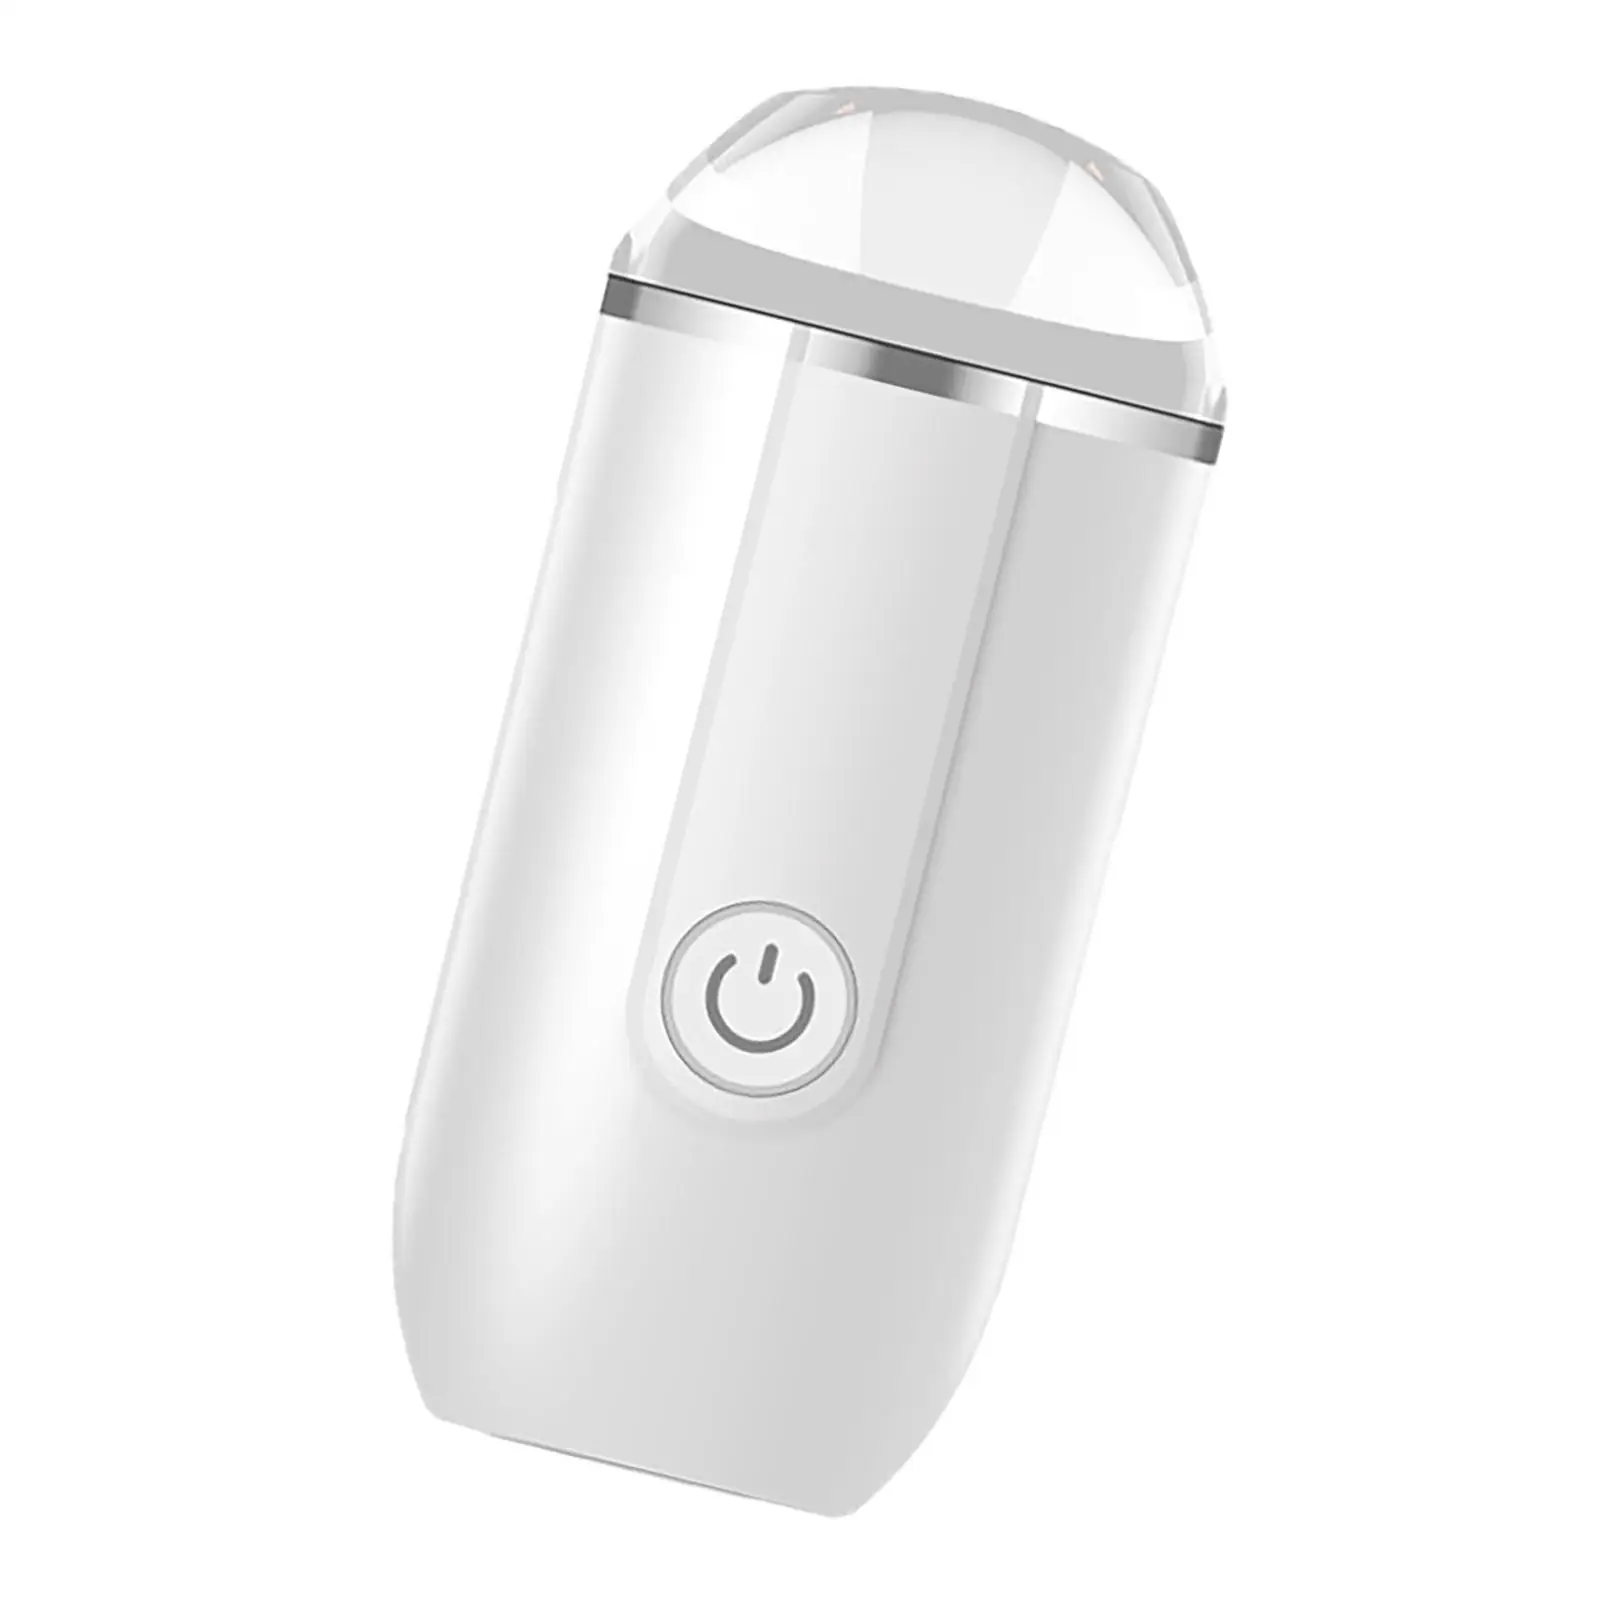 Pocket Size Travel Electric Razor Washable USB Charging Silent for Men Gift